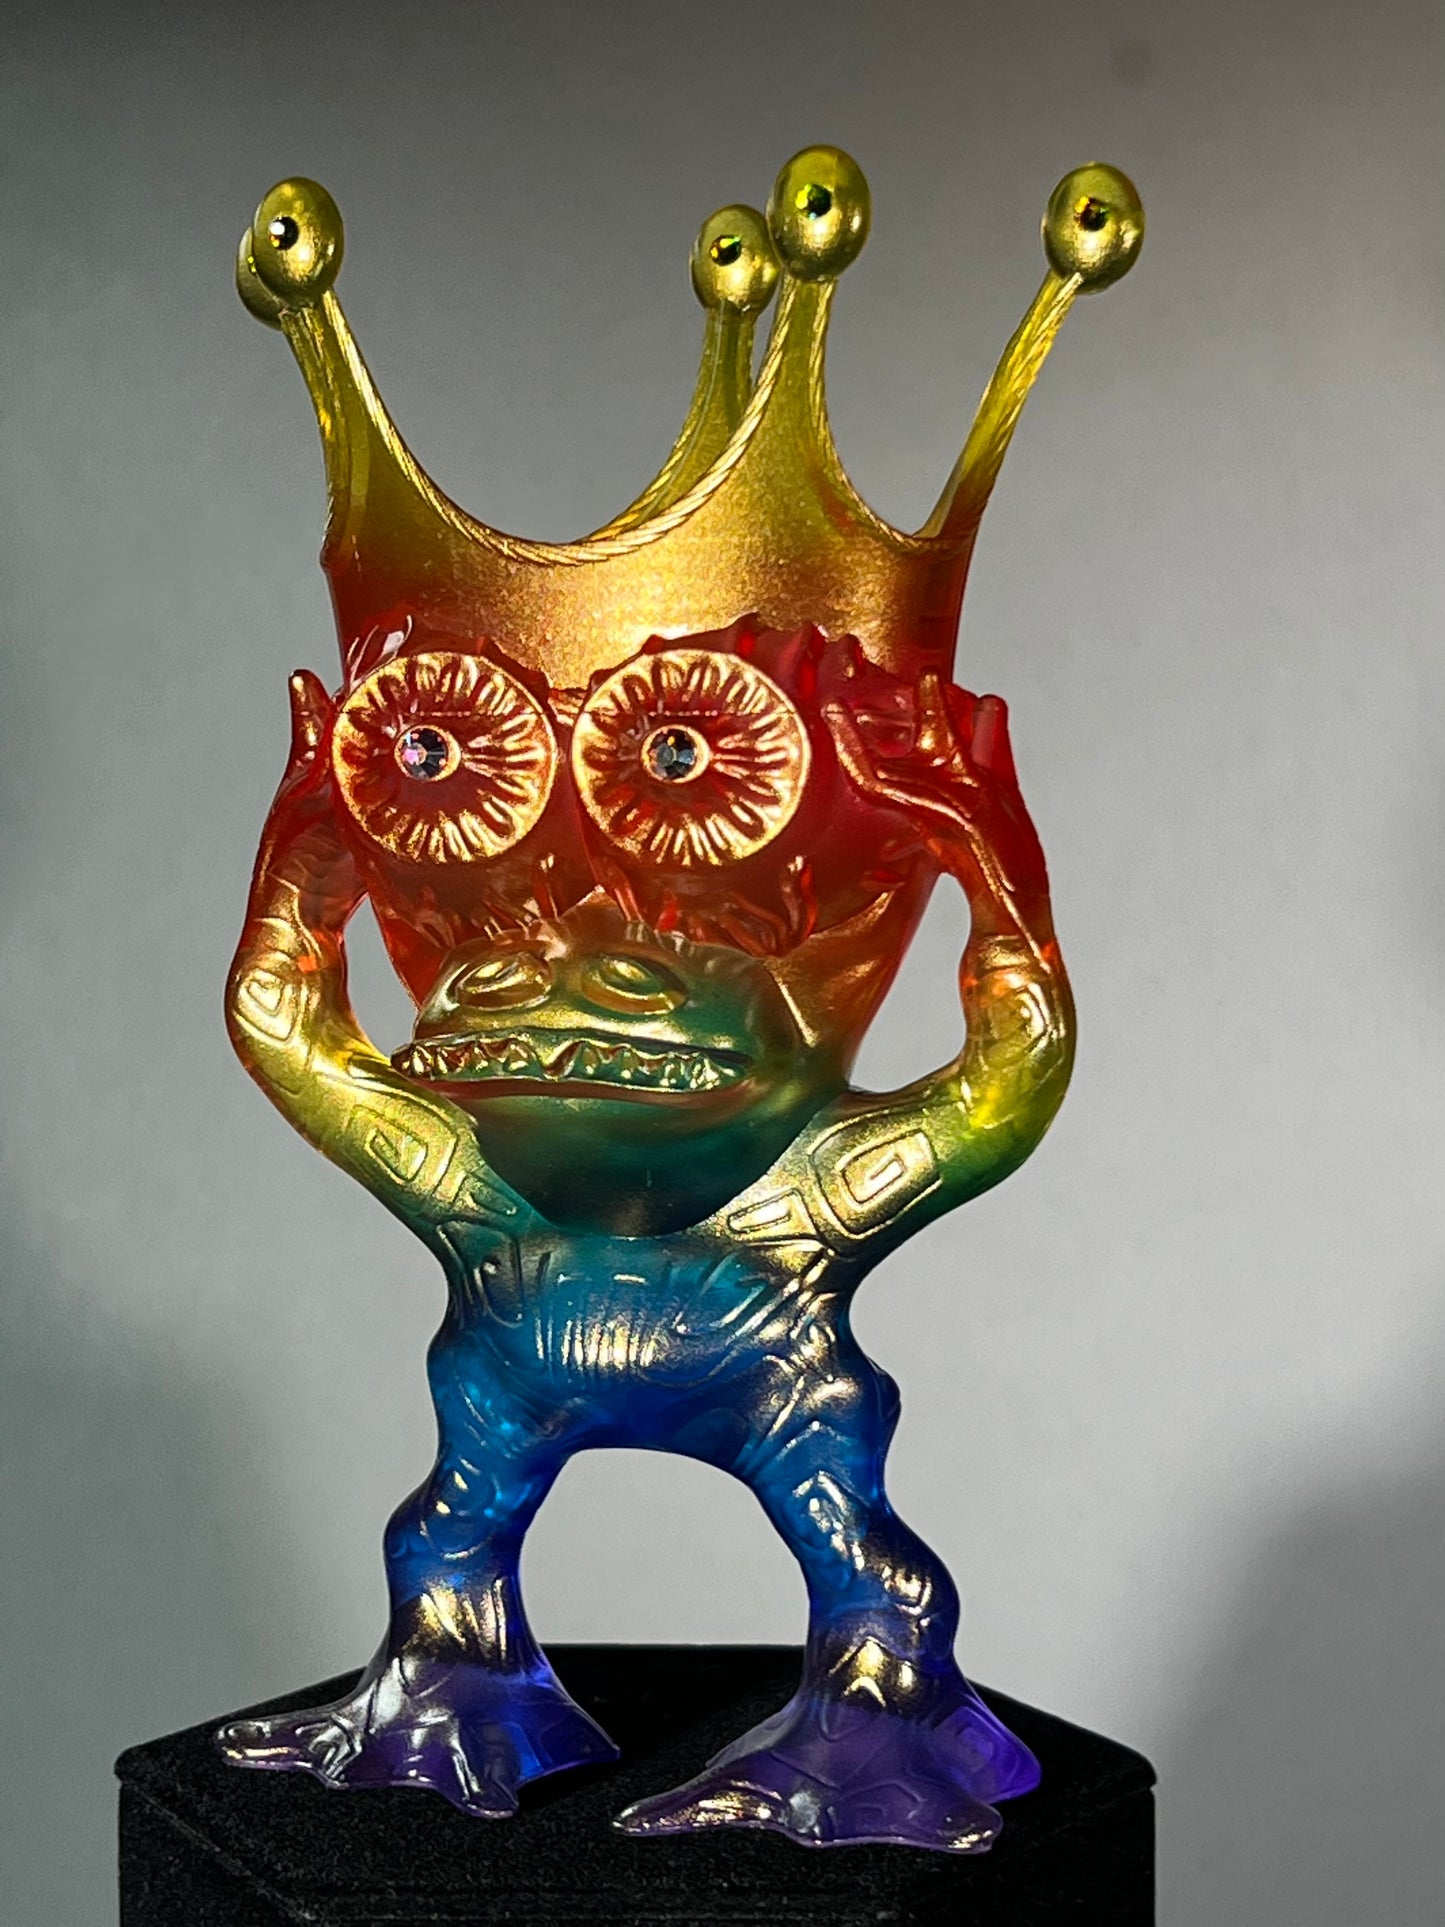 Eyeball Freak King: Transparent Gold Rainbow